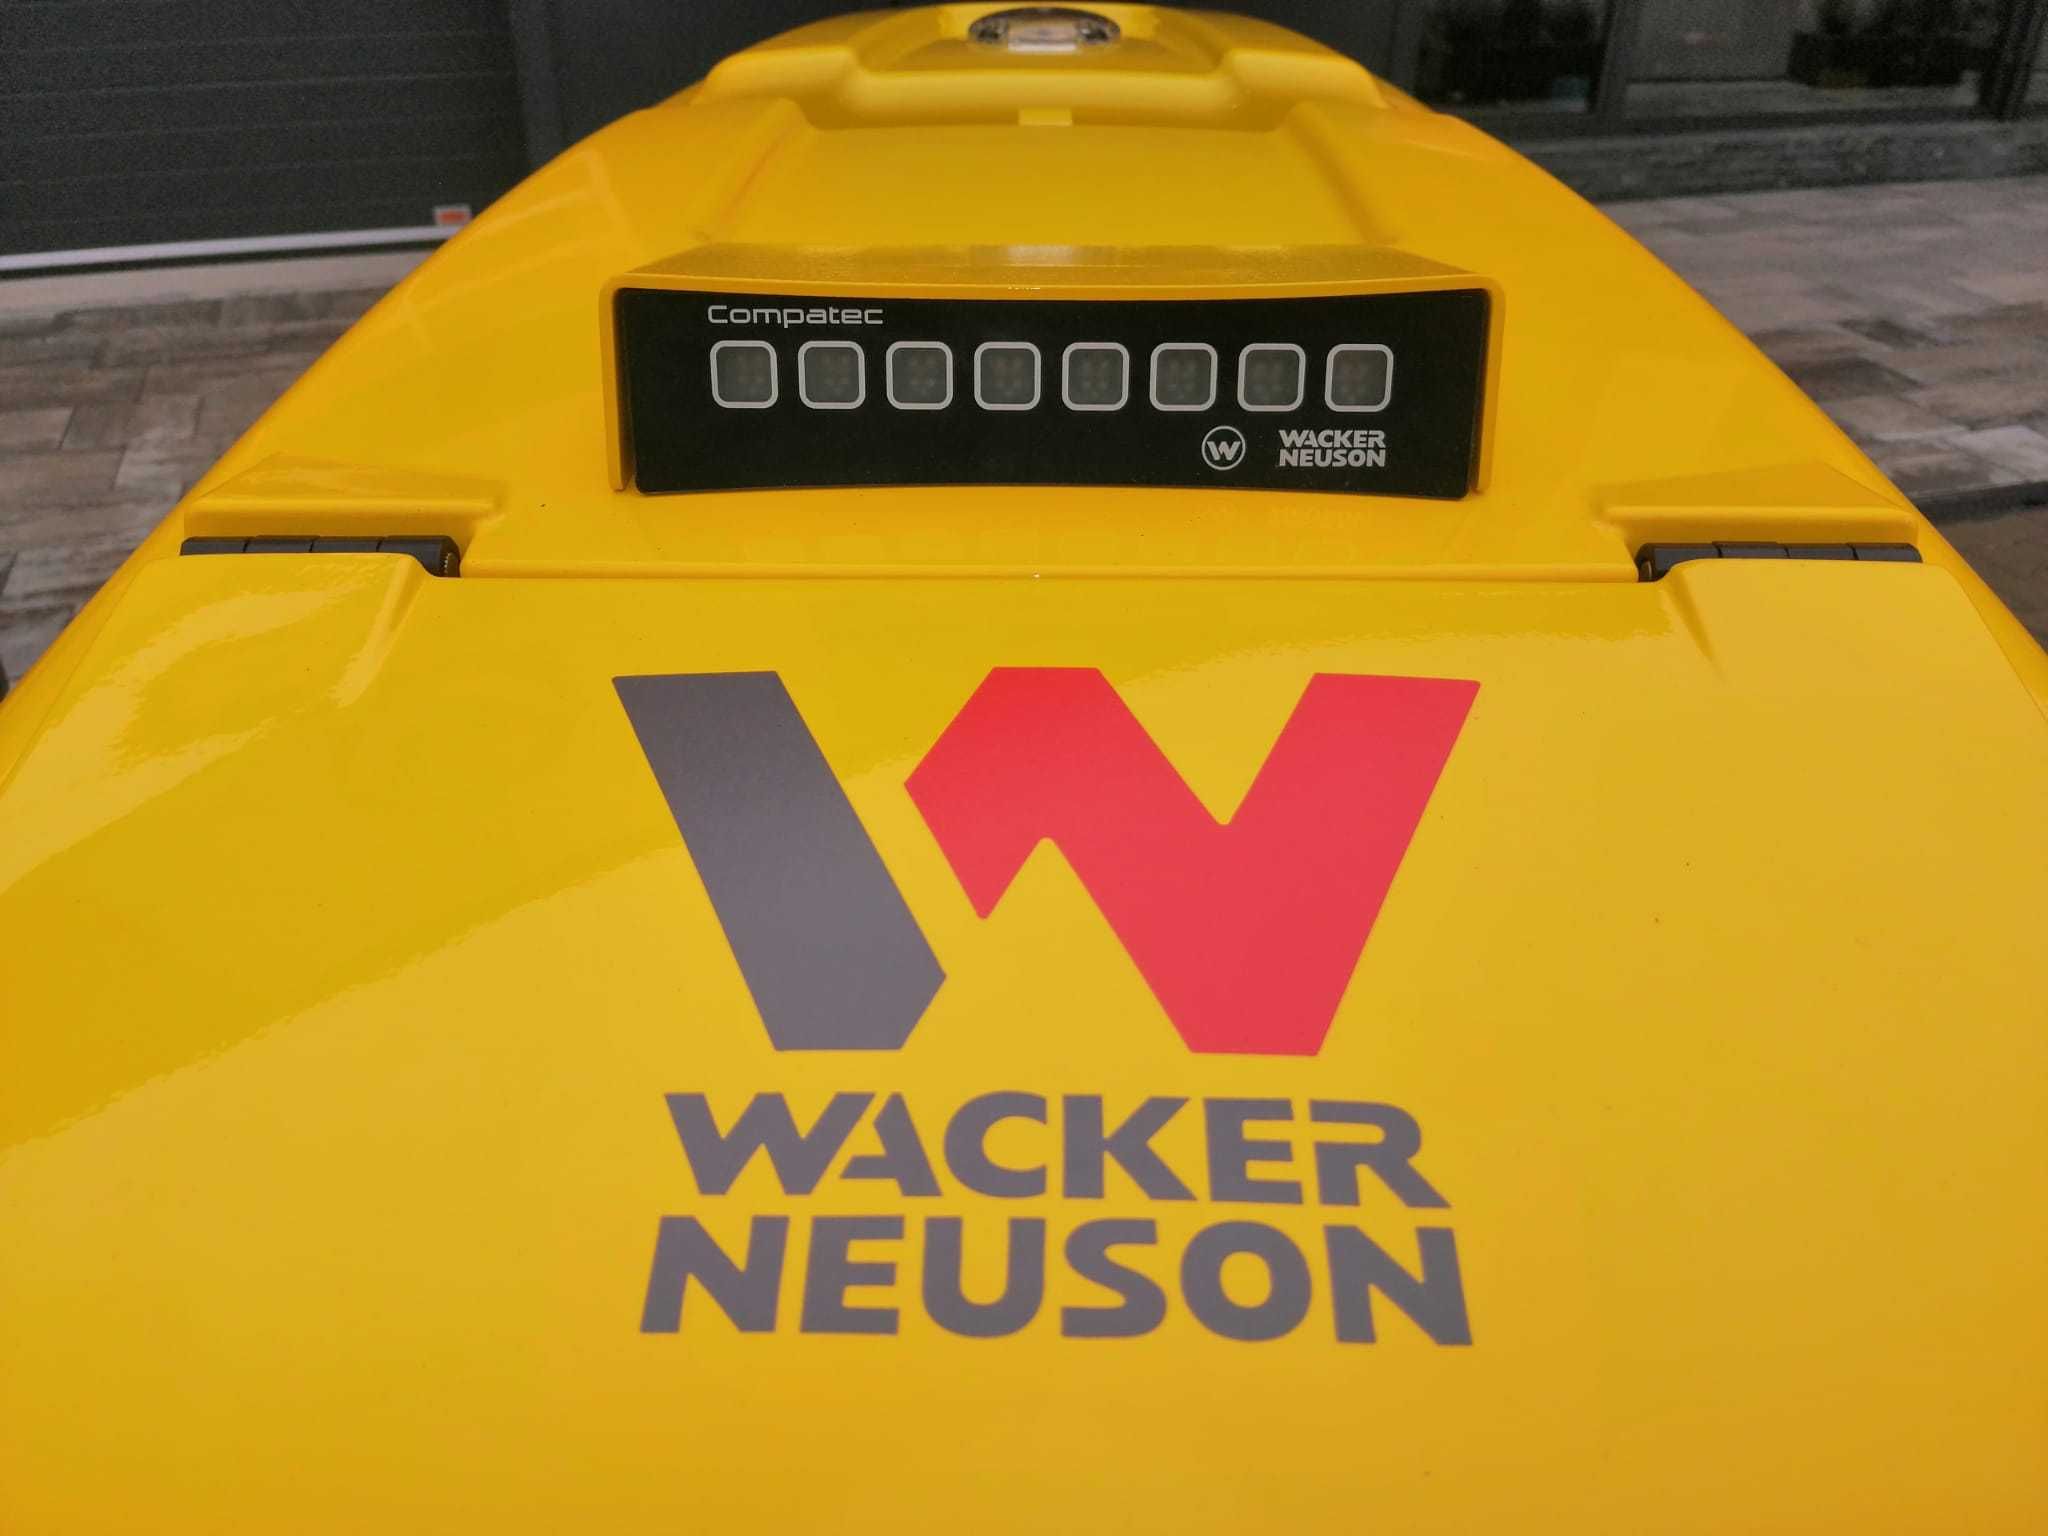 Cilindru compactor picior de oaie Wacker Neuson RTK-SC3